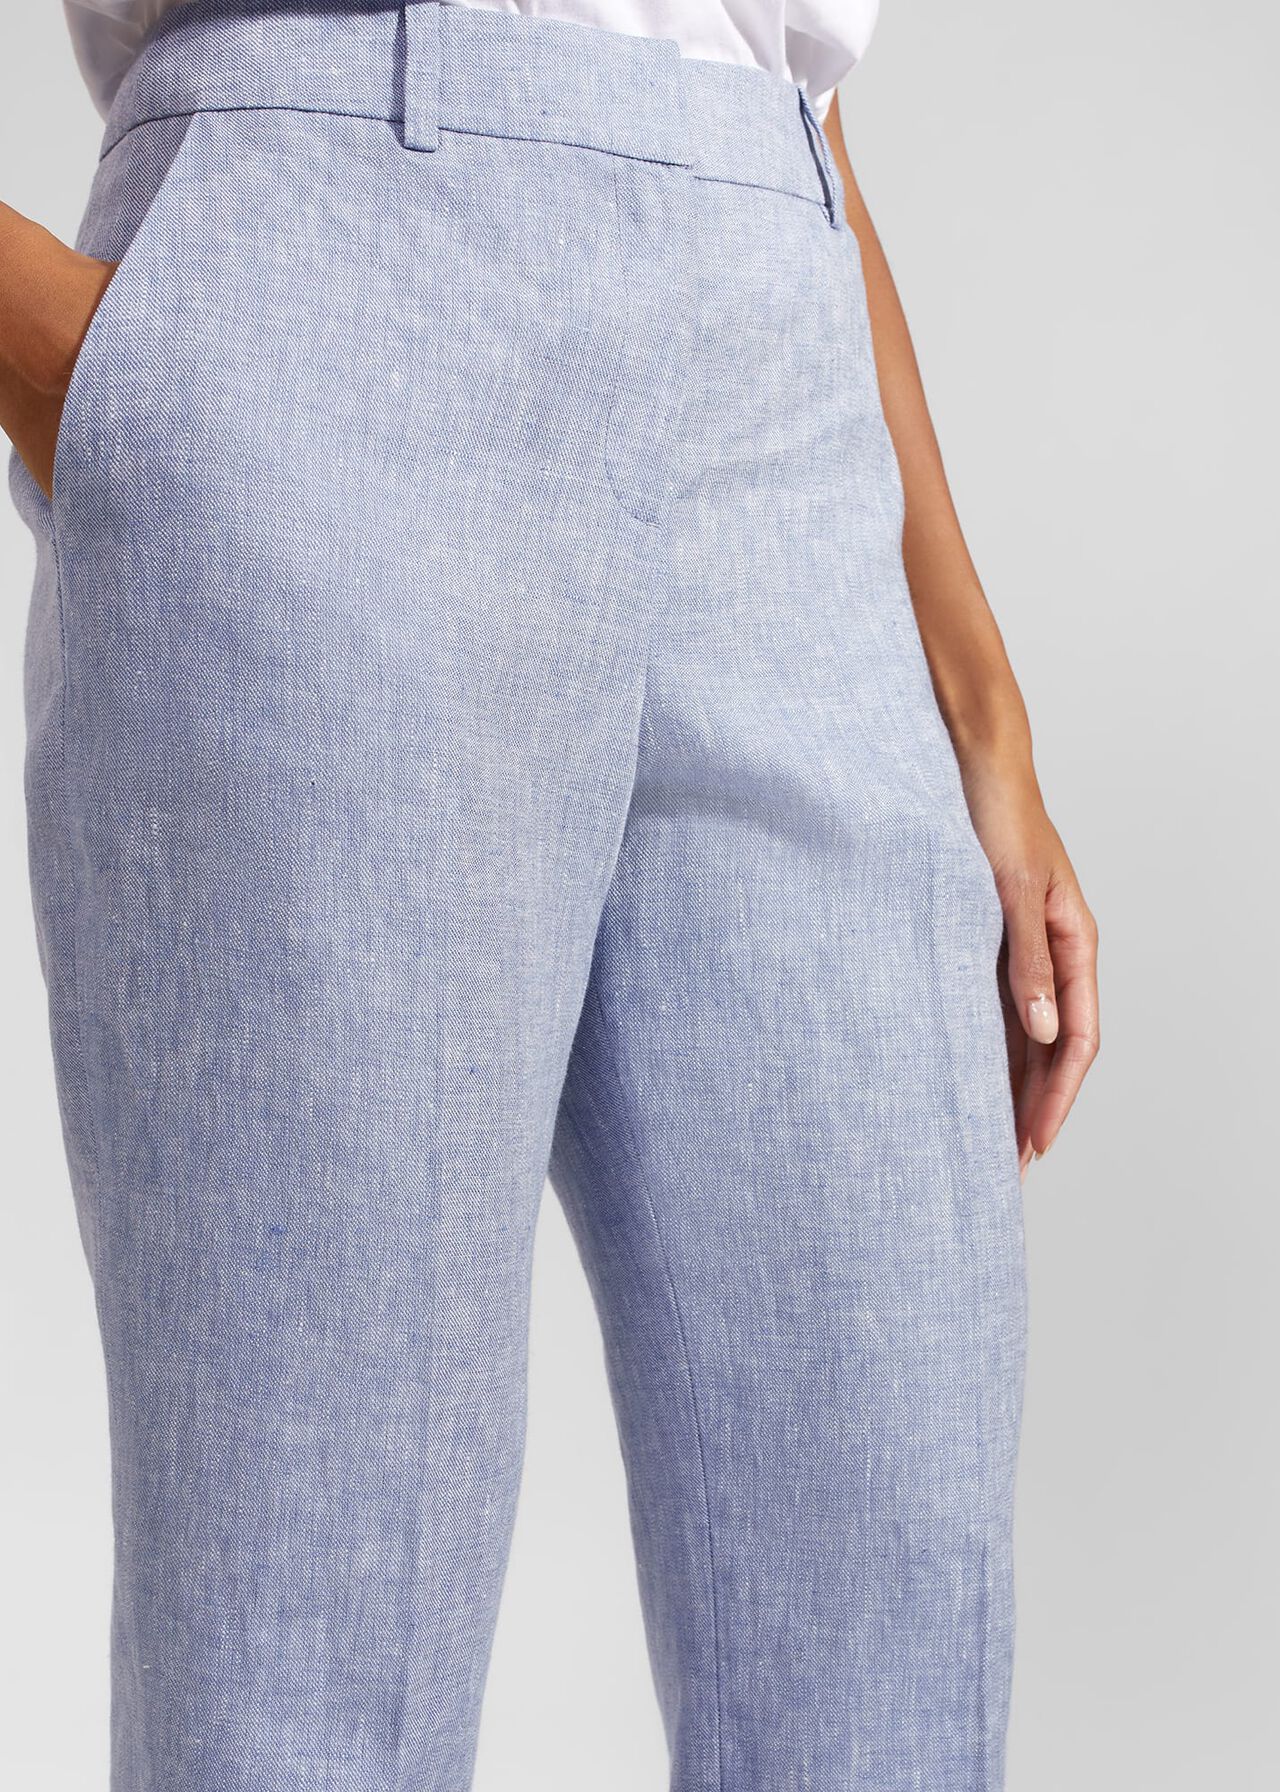 Adina Straight Linen Trousers, Blue Ivory, hi-res